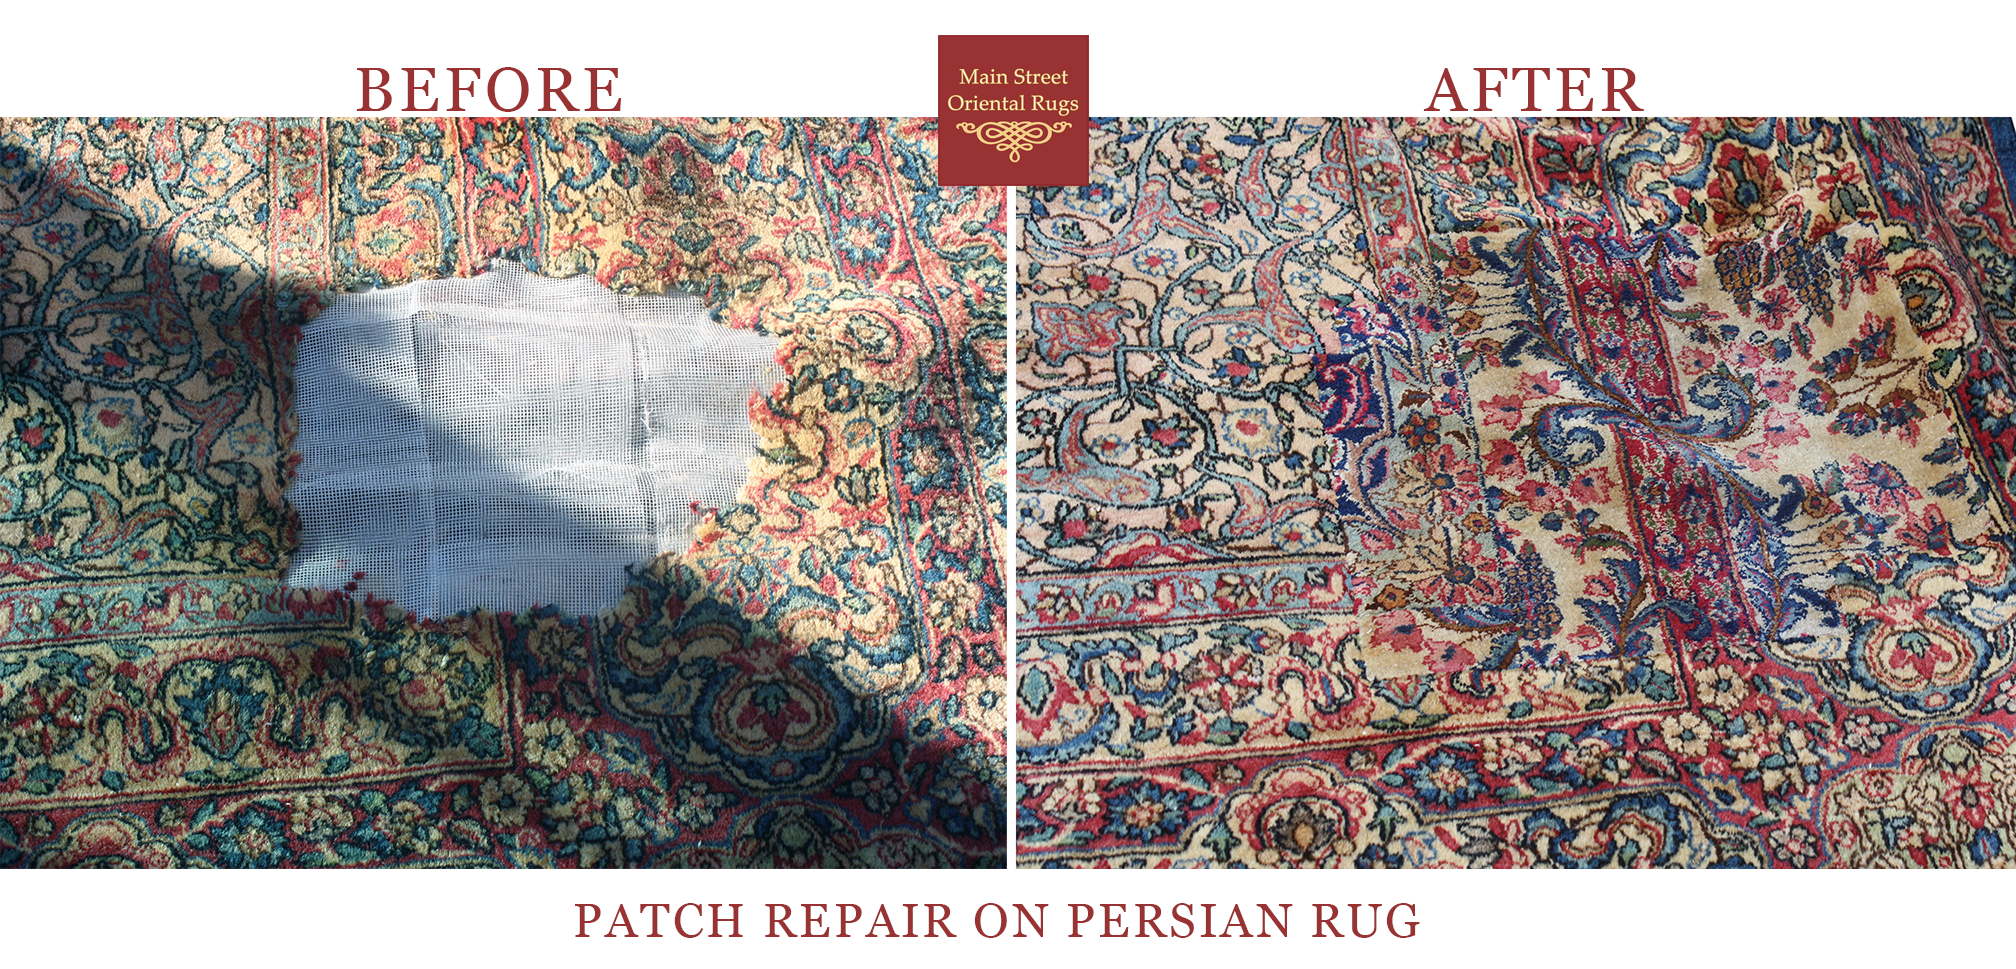 Persian rug patch repair - Main Street Oriental Rugs